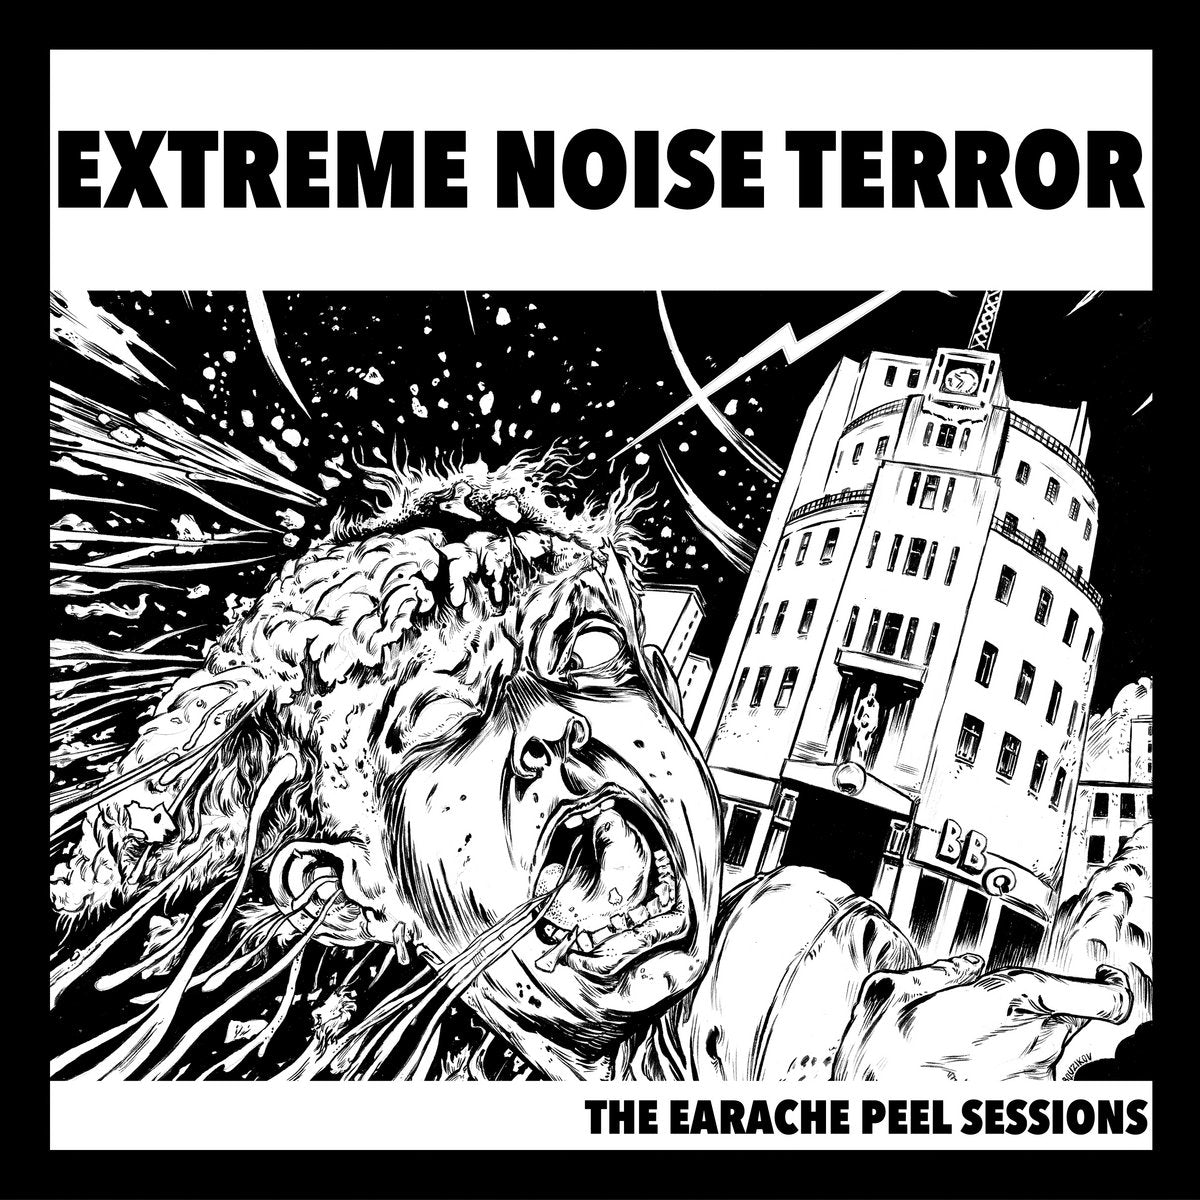 Extreme Noise Terror "The Earache Peel Sessions" Vinyl